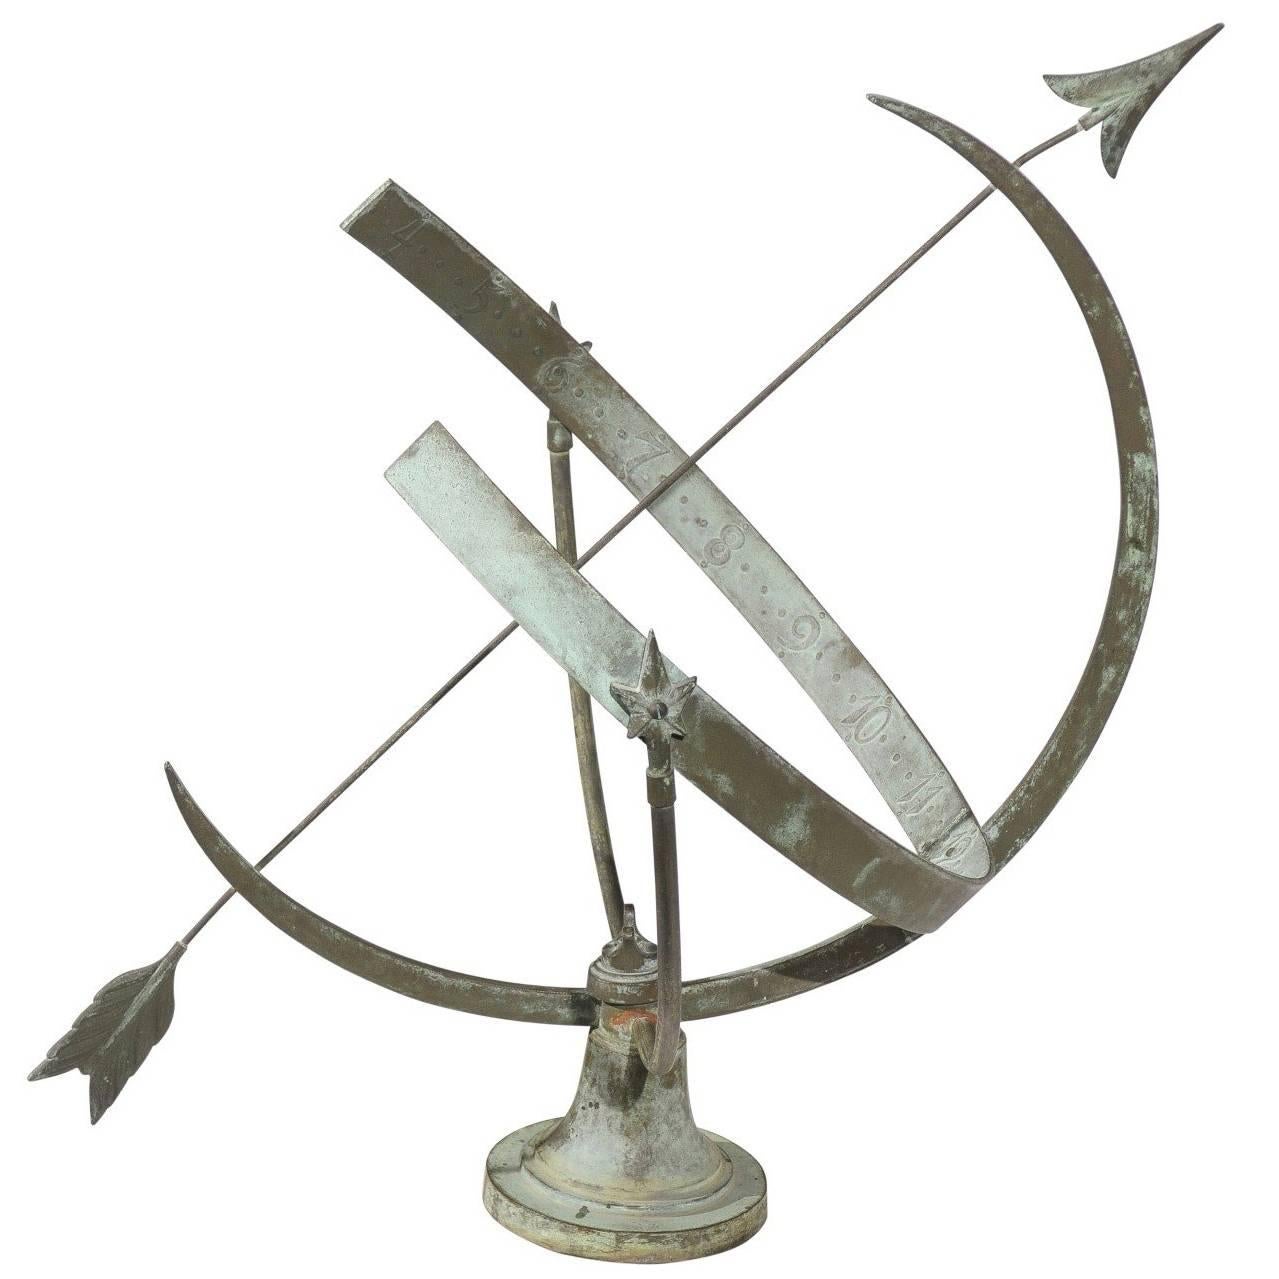 Early 20th Century Metal Armillary Sphere Sundial with Arrow